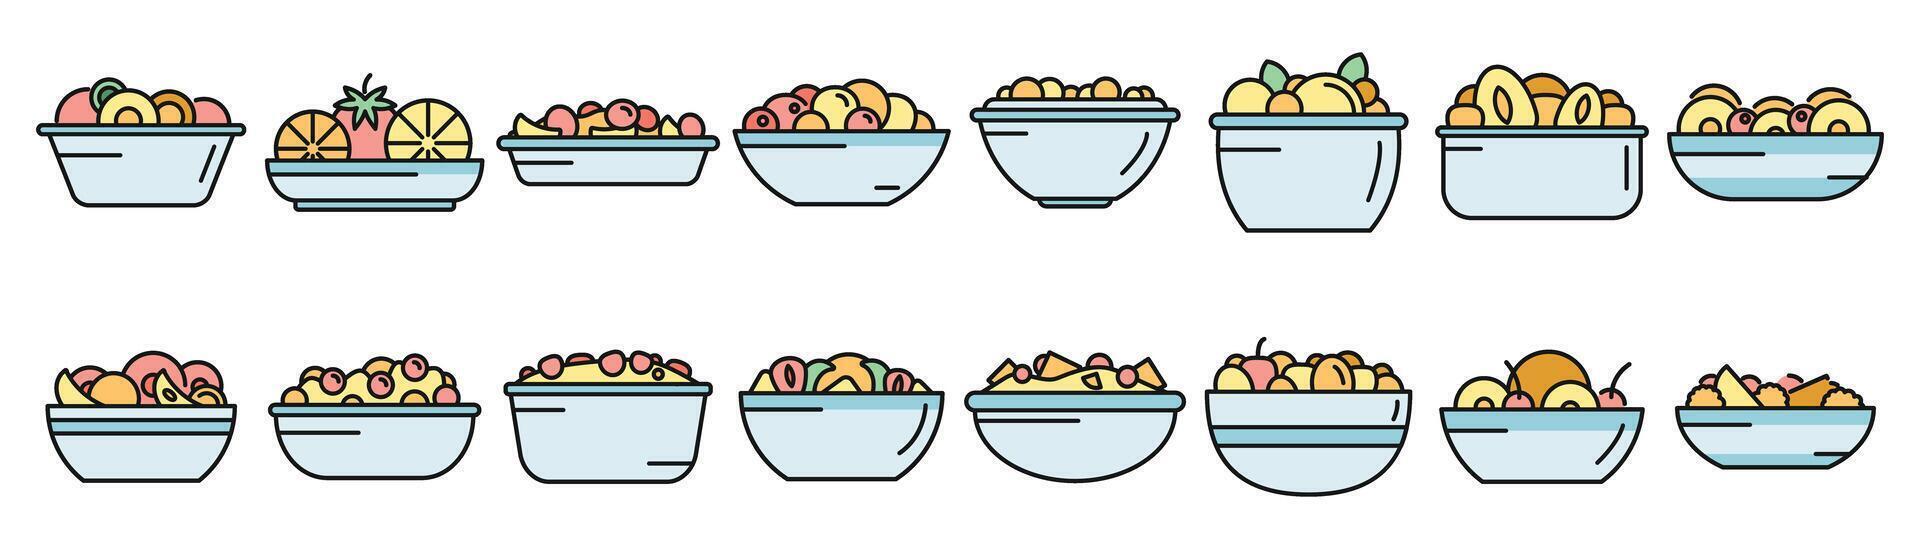 Fruit salad icons set vector color line